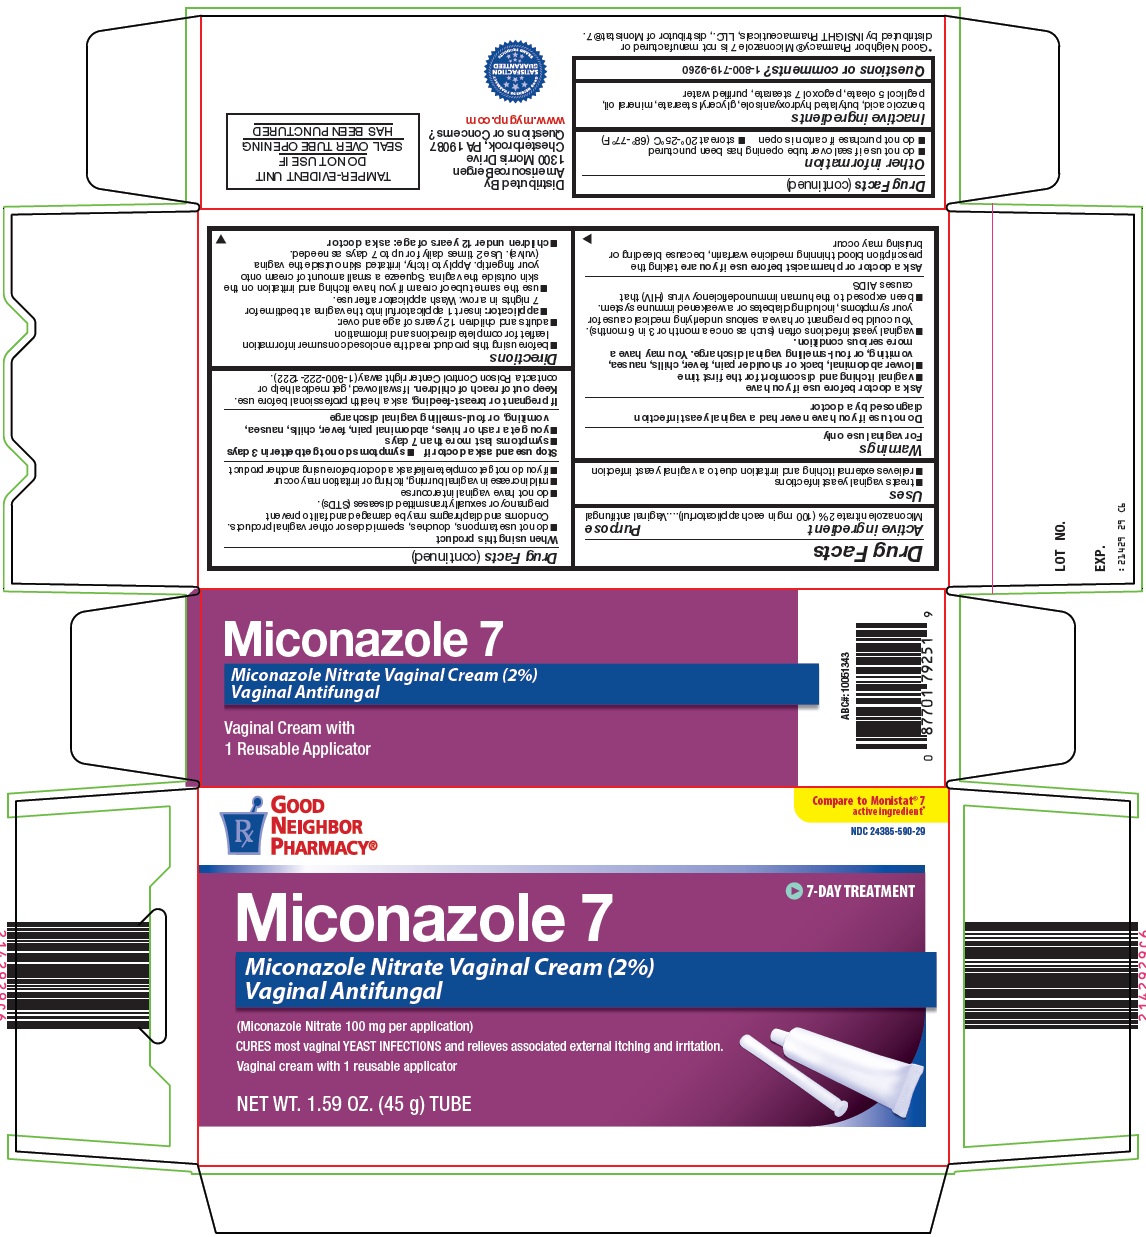 Good Neighbor Pharmacy Miconazole 7